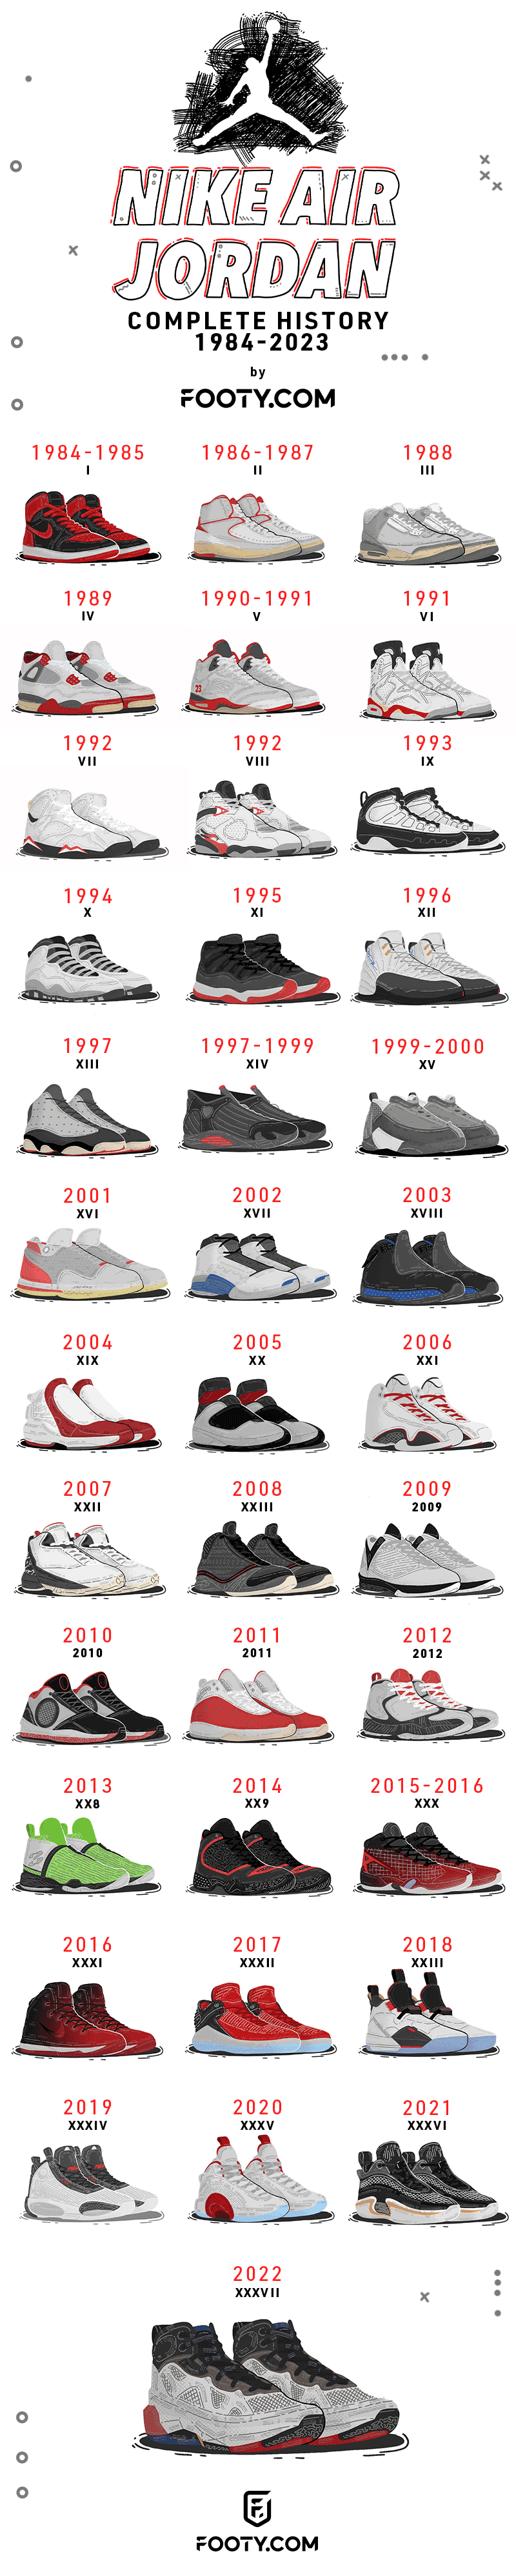 Nike Air Jordan (complete 1984-2023 timeline) | FOOTY.COM Blog